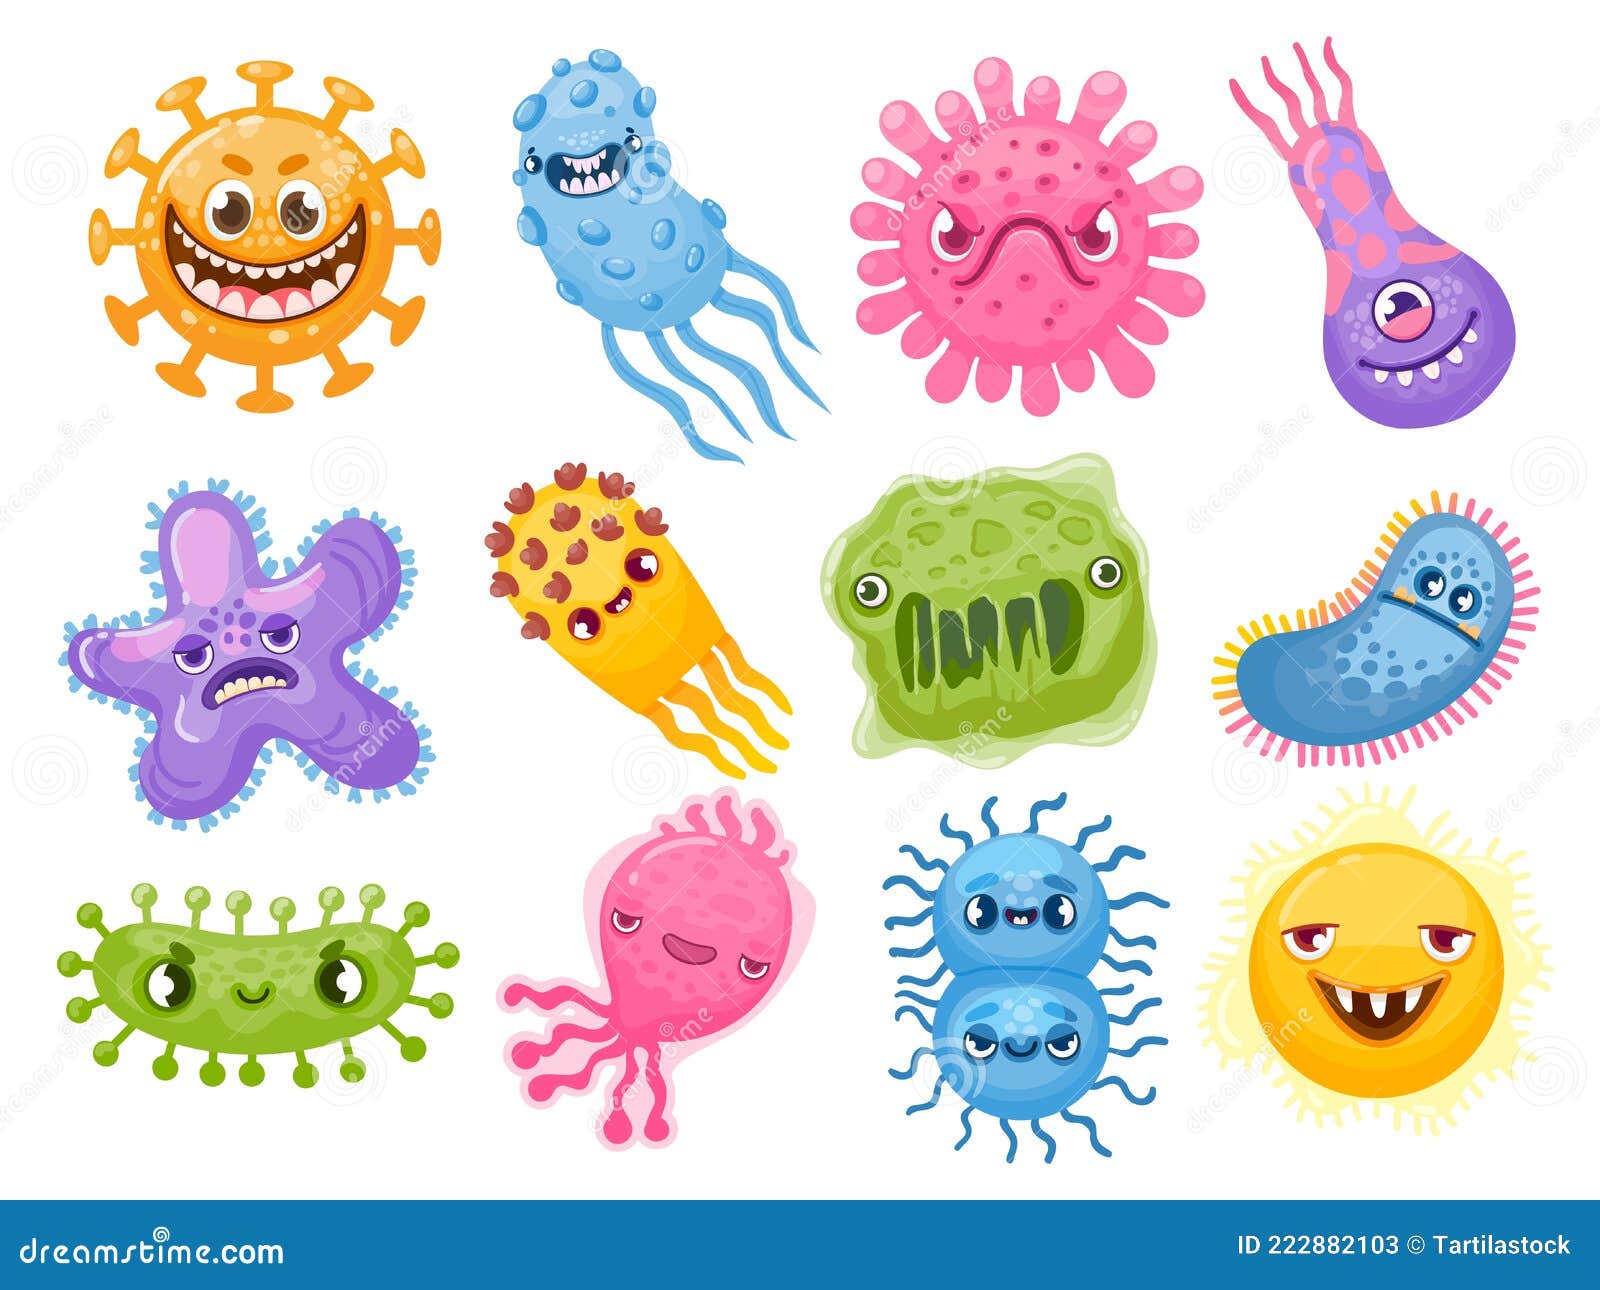 cartoon viruses. germ and bacteria with evil faces. bad pathogen microbe character. coronavirus and flu disease